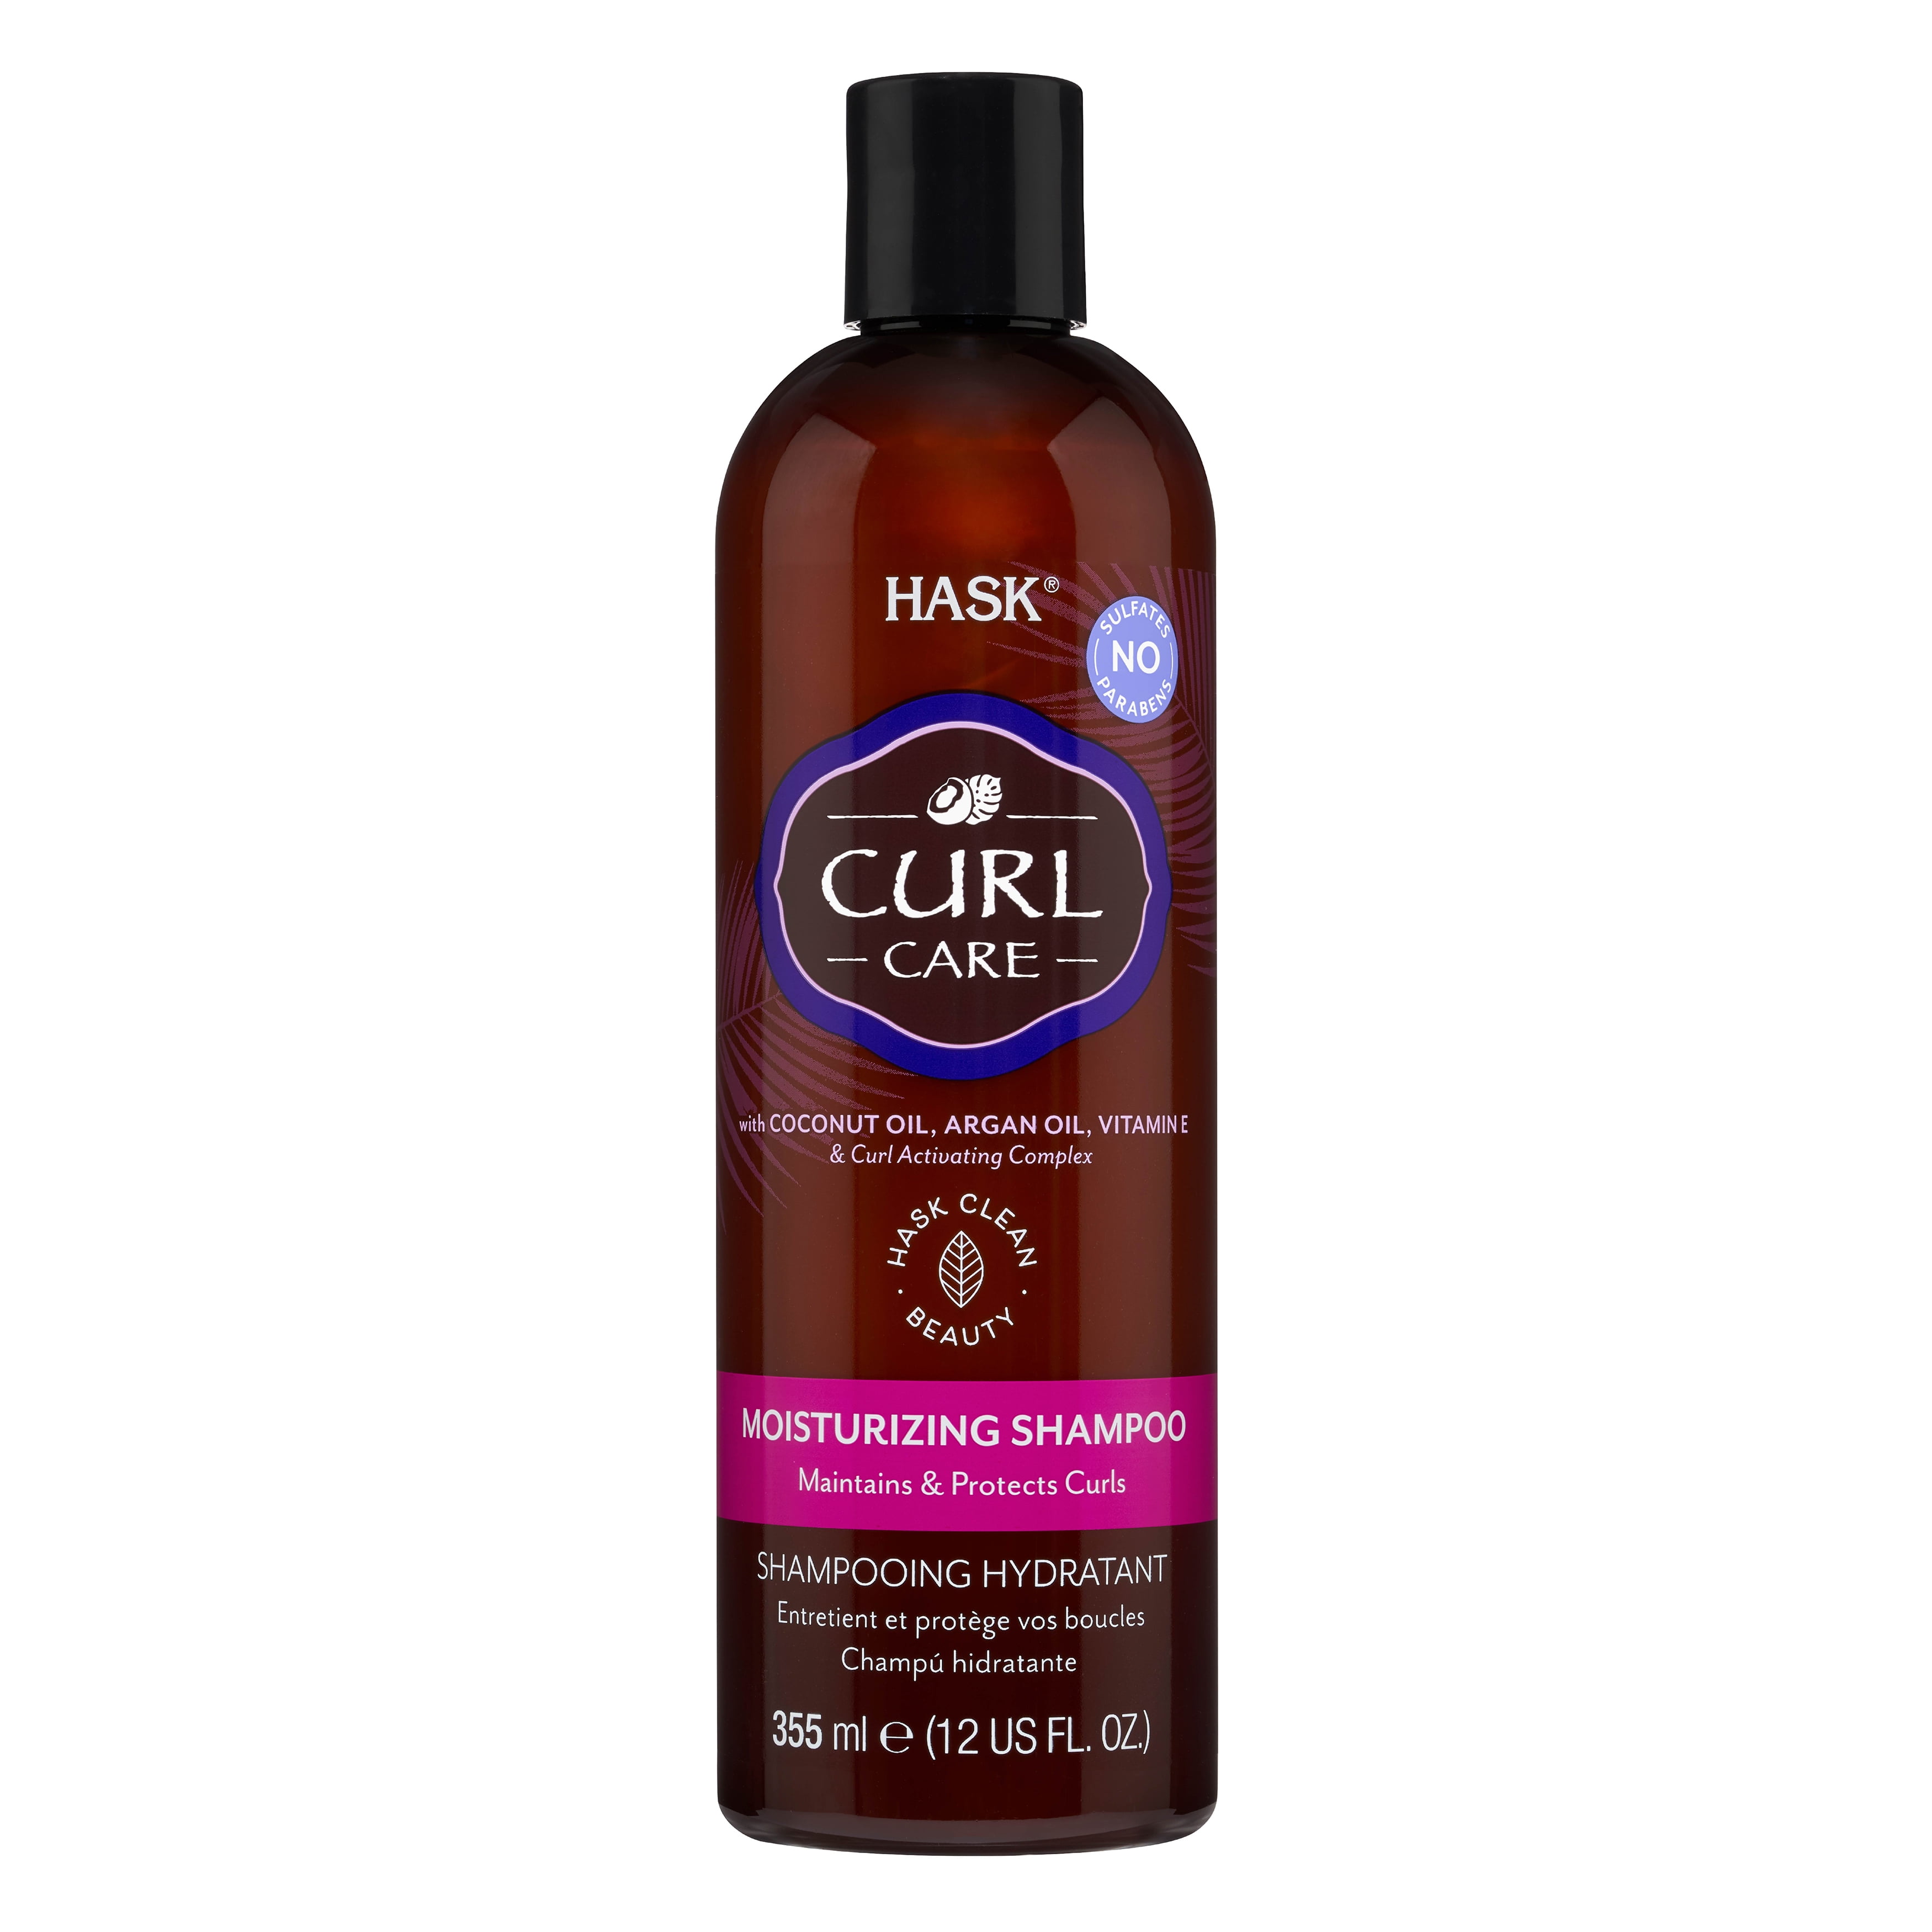 Hask Curl Care Moisturizing Daily Shampoo with Coconut Oil, Argan & Vitamin E, 12 fl oz - Walmart.com